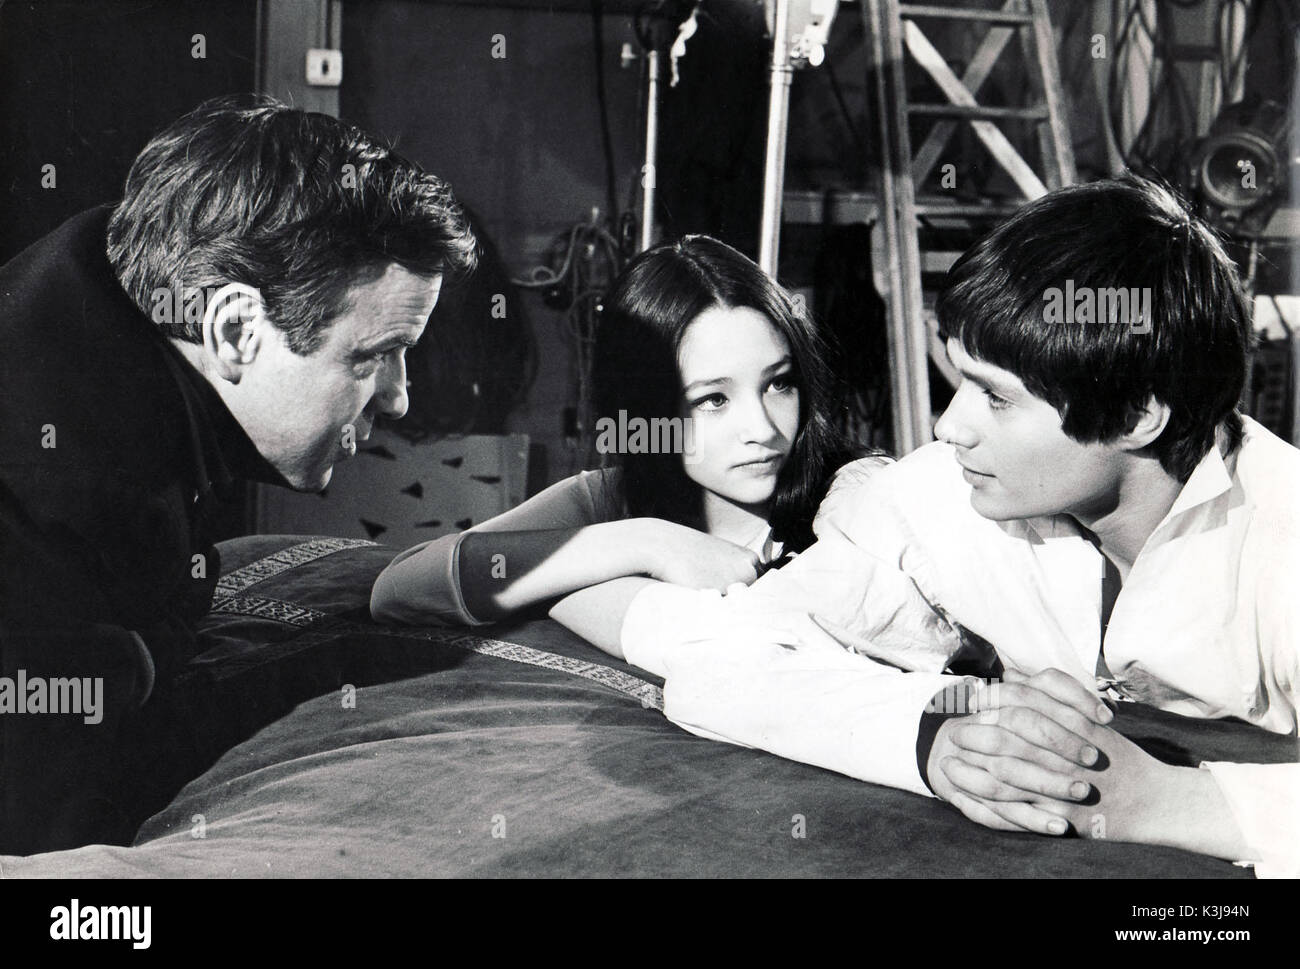 ROMEO AND JULIET Director FRANCO ZEFFIRELLI, OLIVIA HUSSEY as Juliet, LEONARD WHITING as Romeo     Date: 1968 Stock Photo